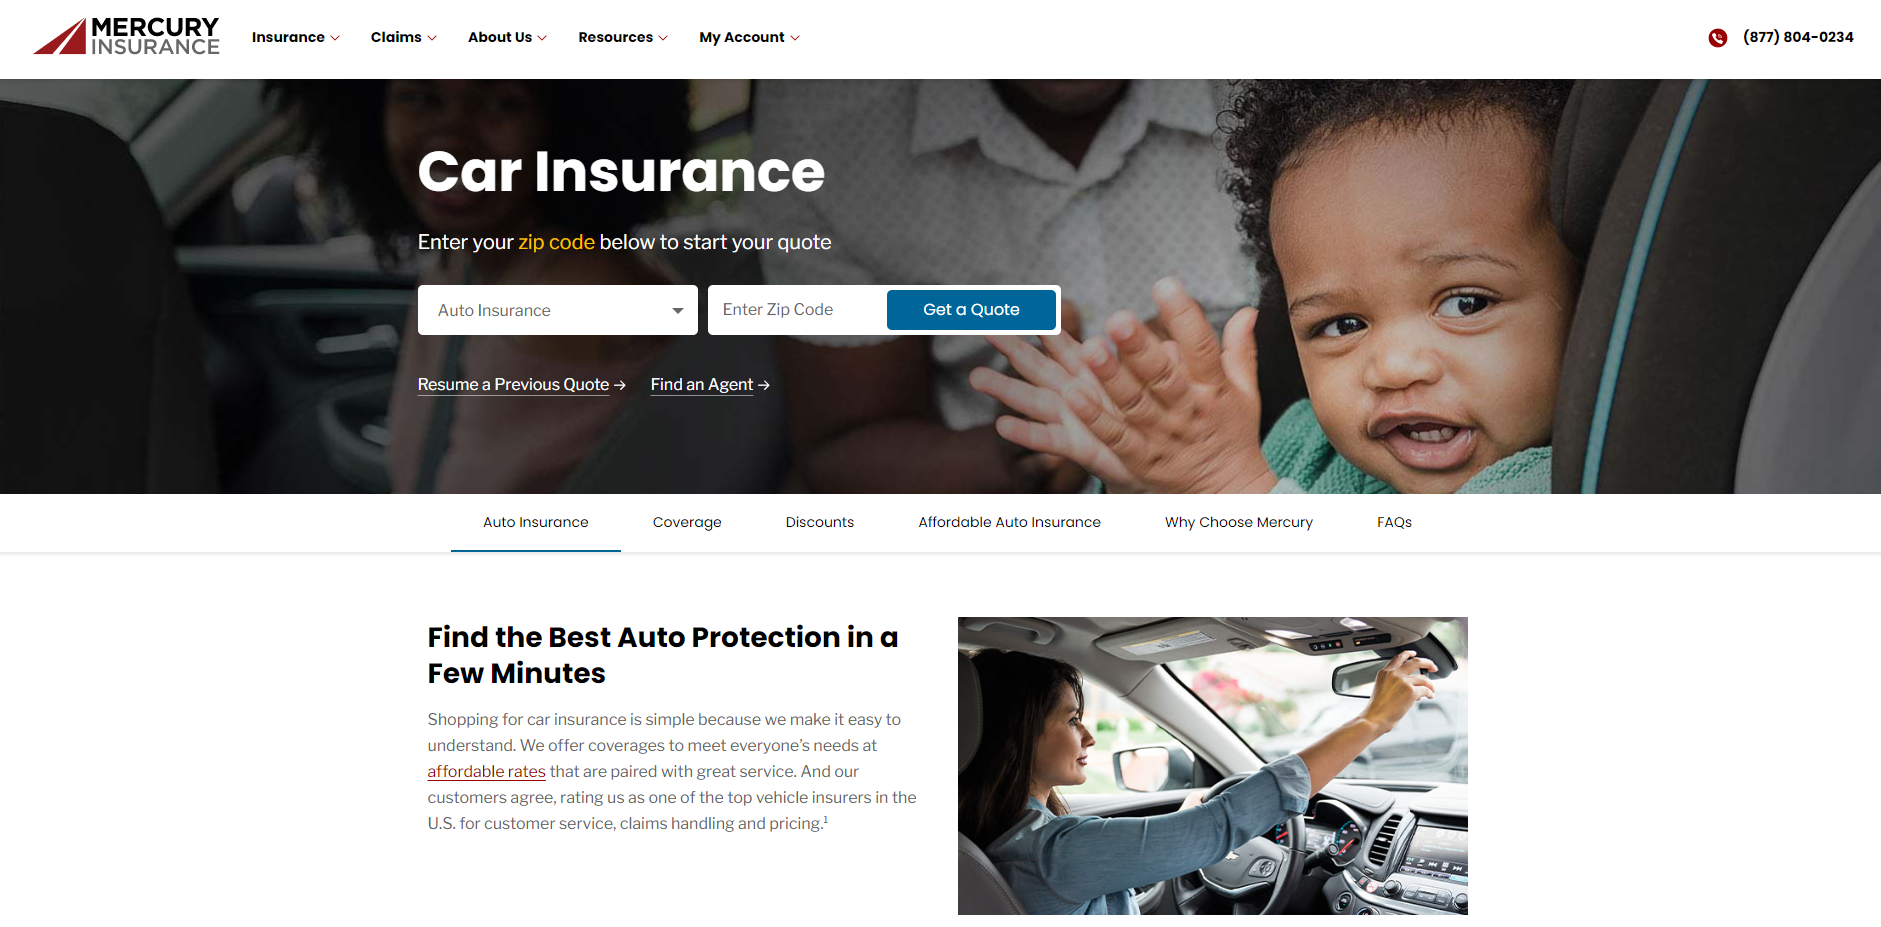 Mercury Insurance home page